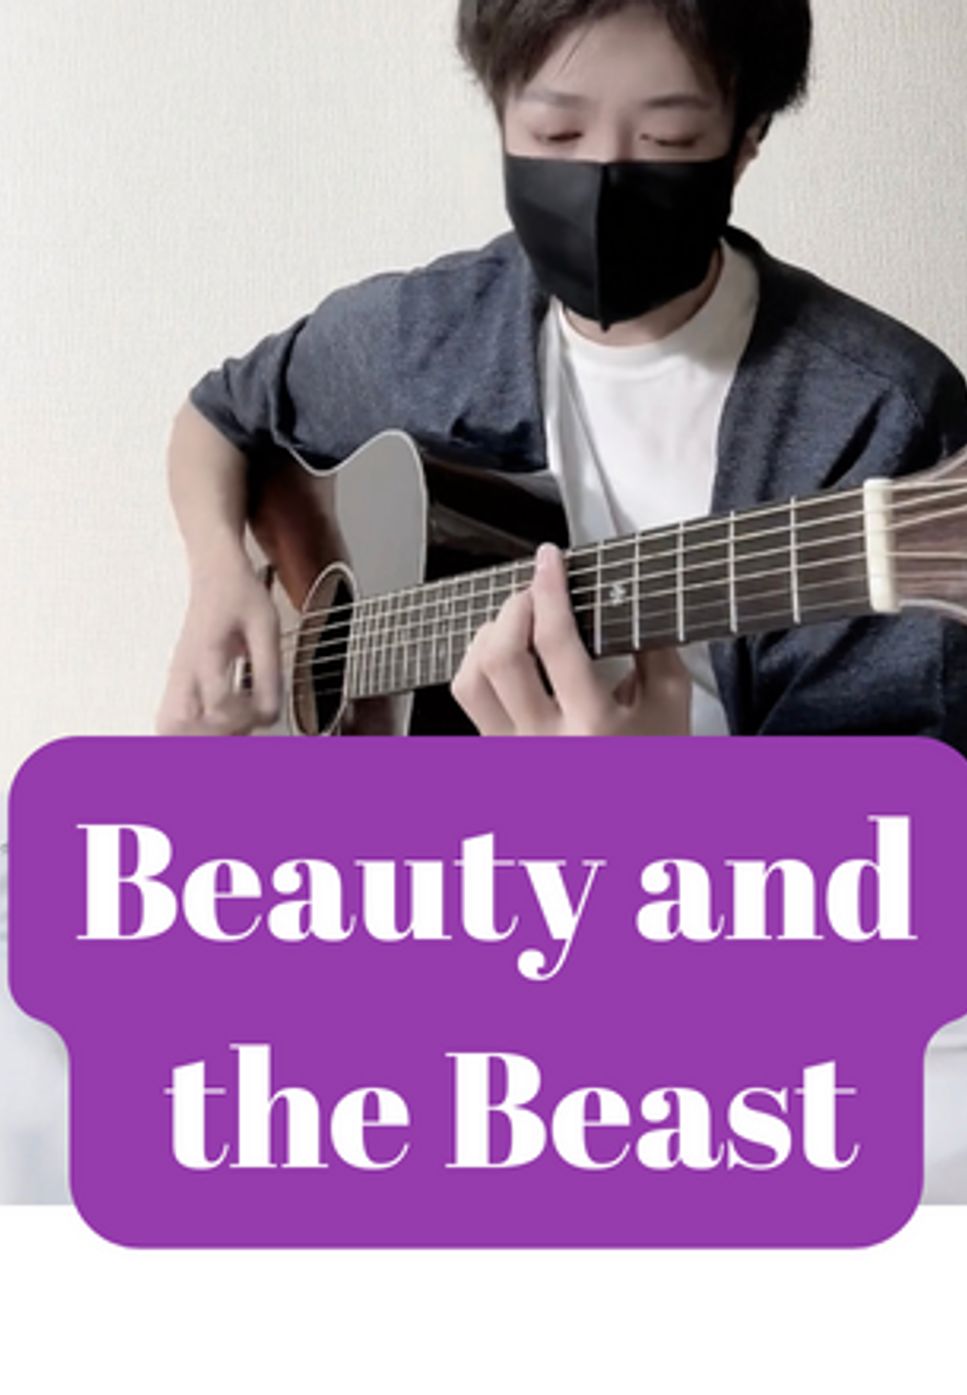 MENKEN ALAN IRWIN - Beauty and the Beast (ソロギター) by 店長